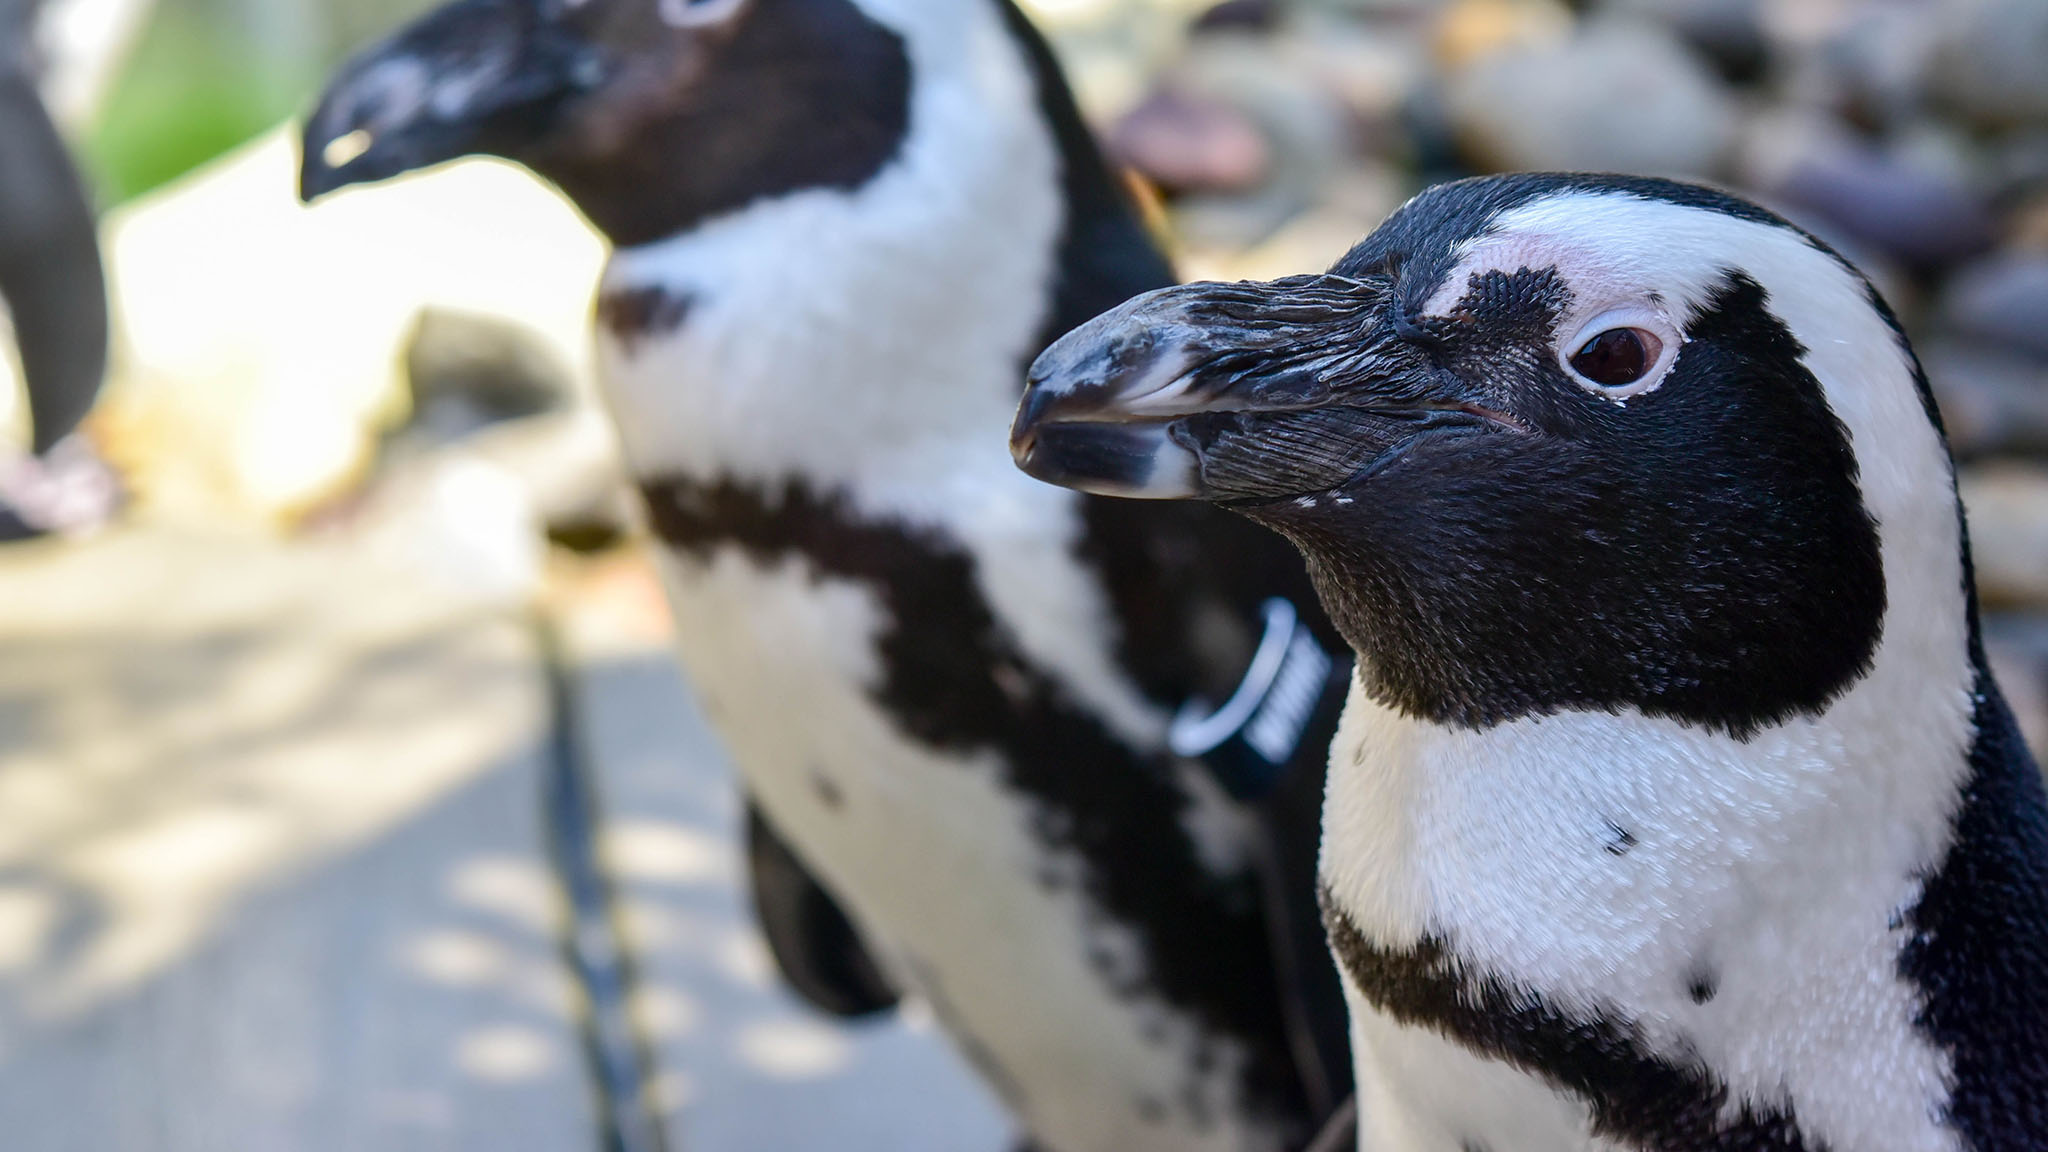 Penguin Encounters The Maryland Zoo - 